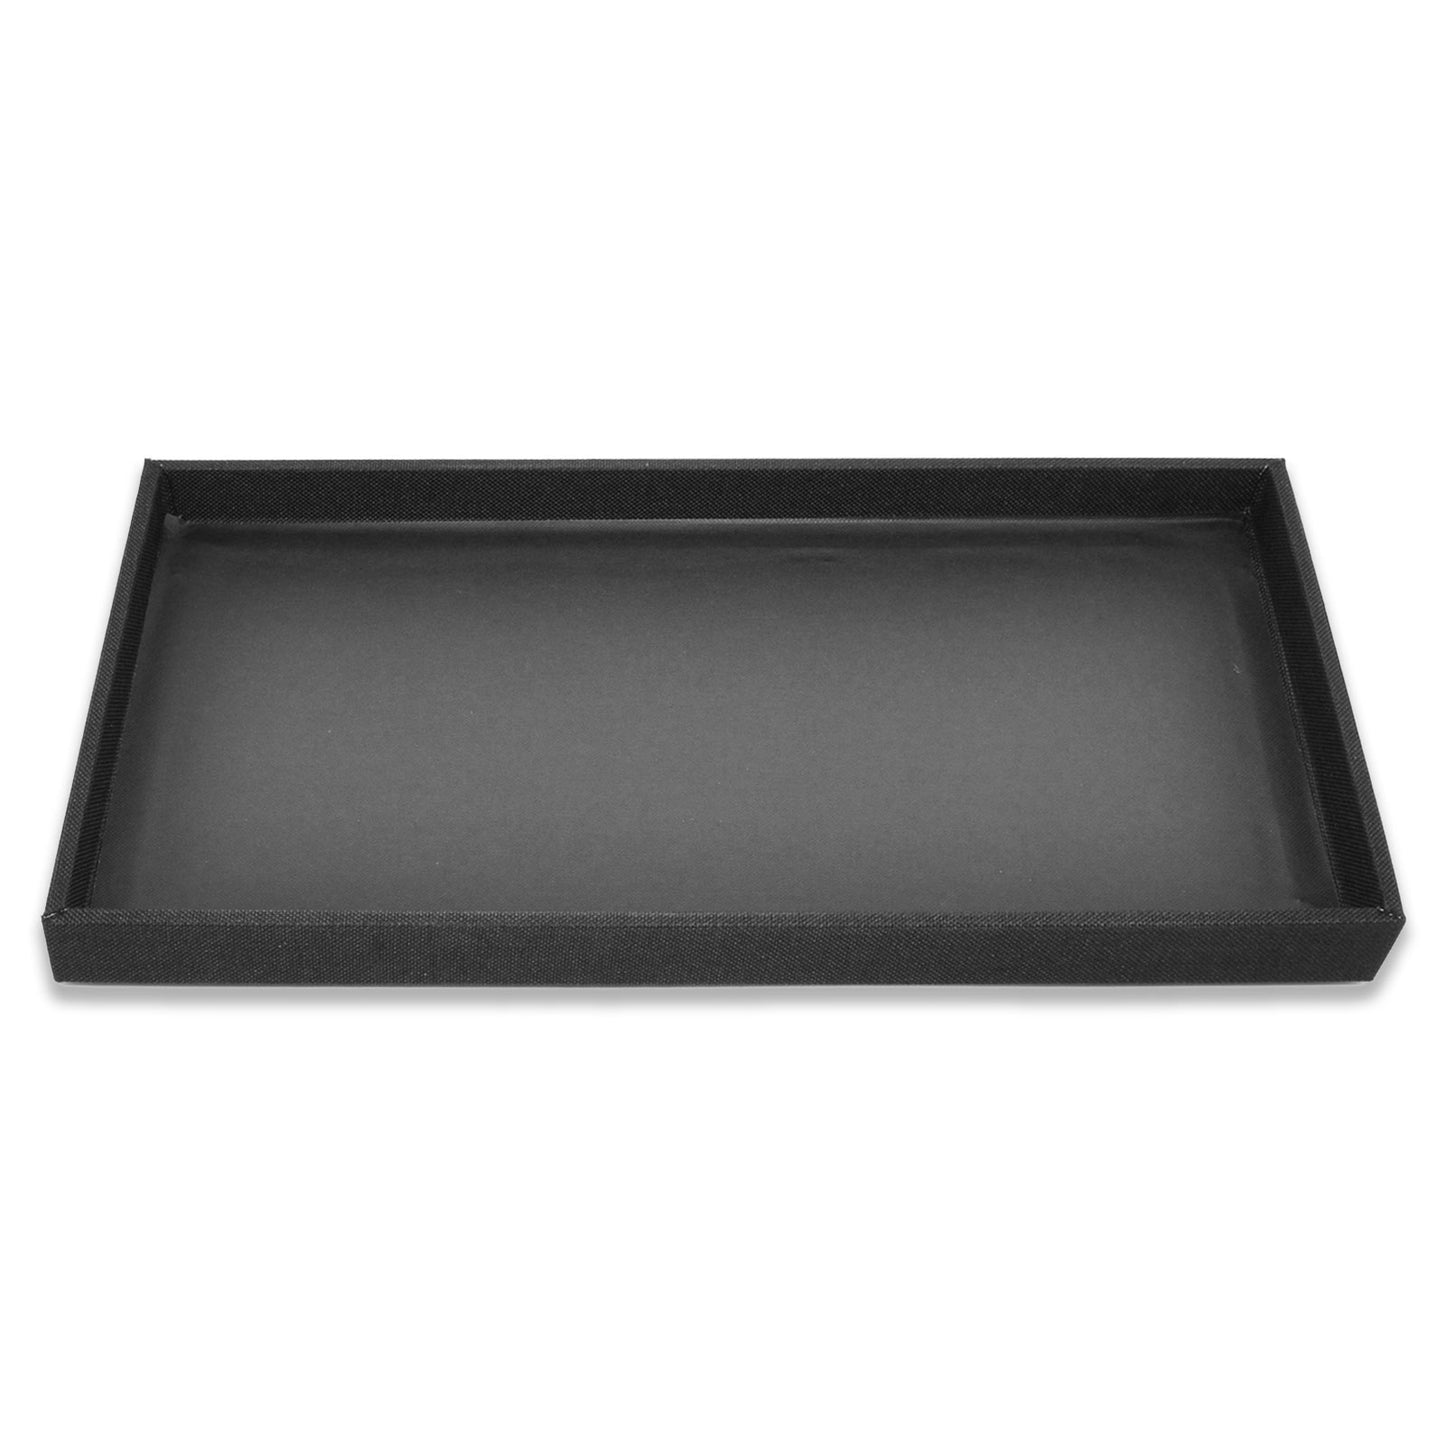 1" Black Linen Wooden Jewelry Display Standard Tray